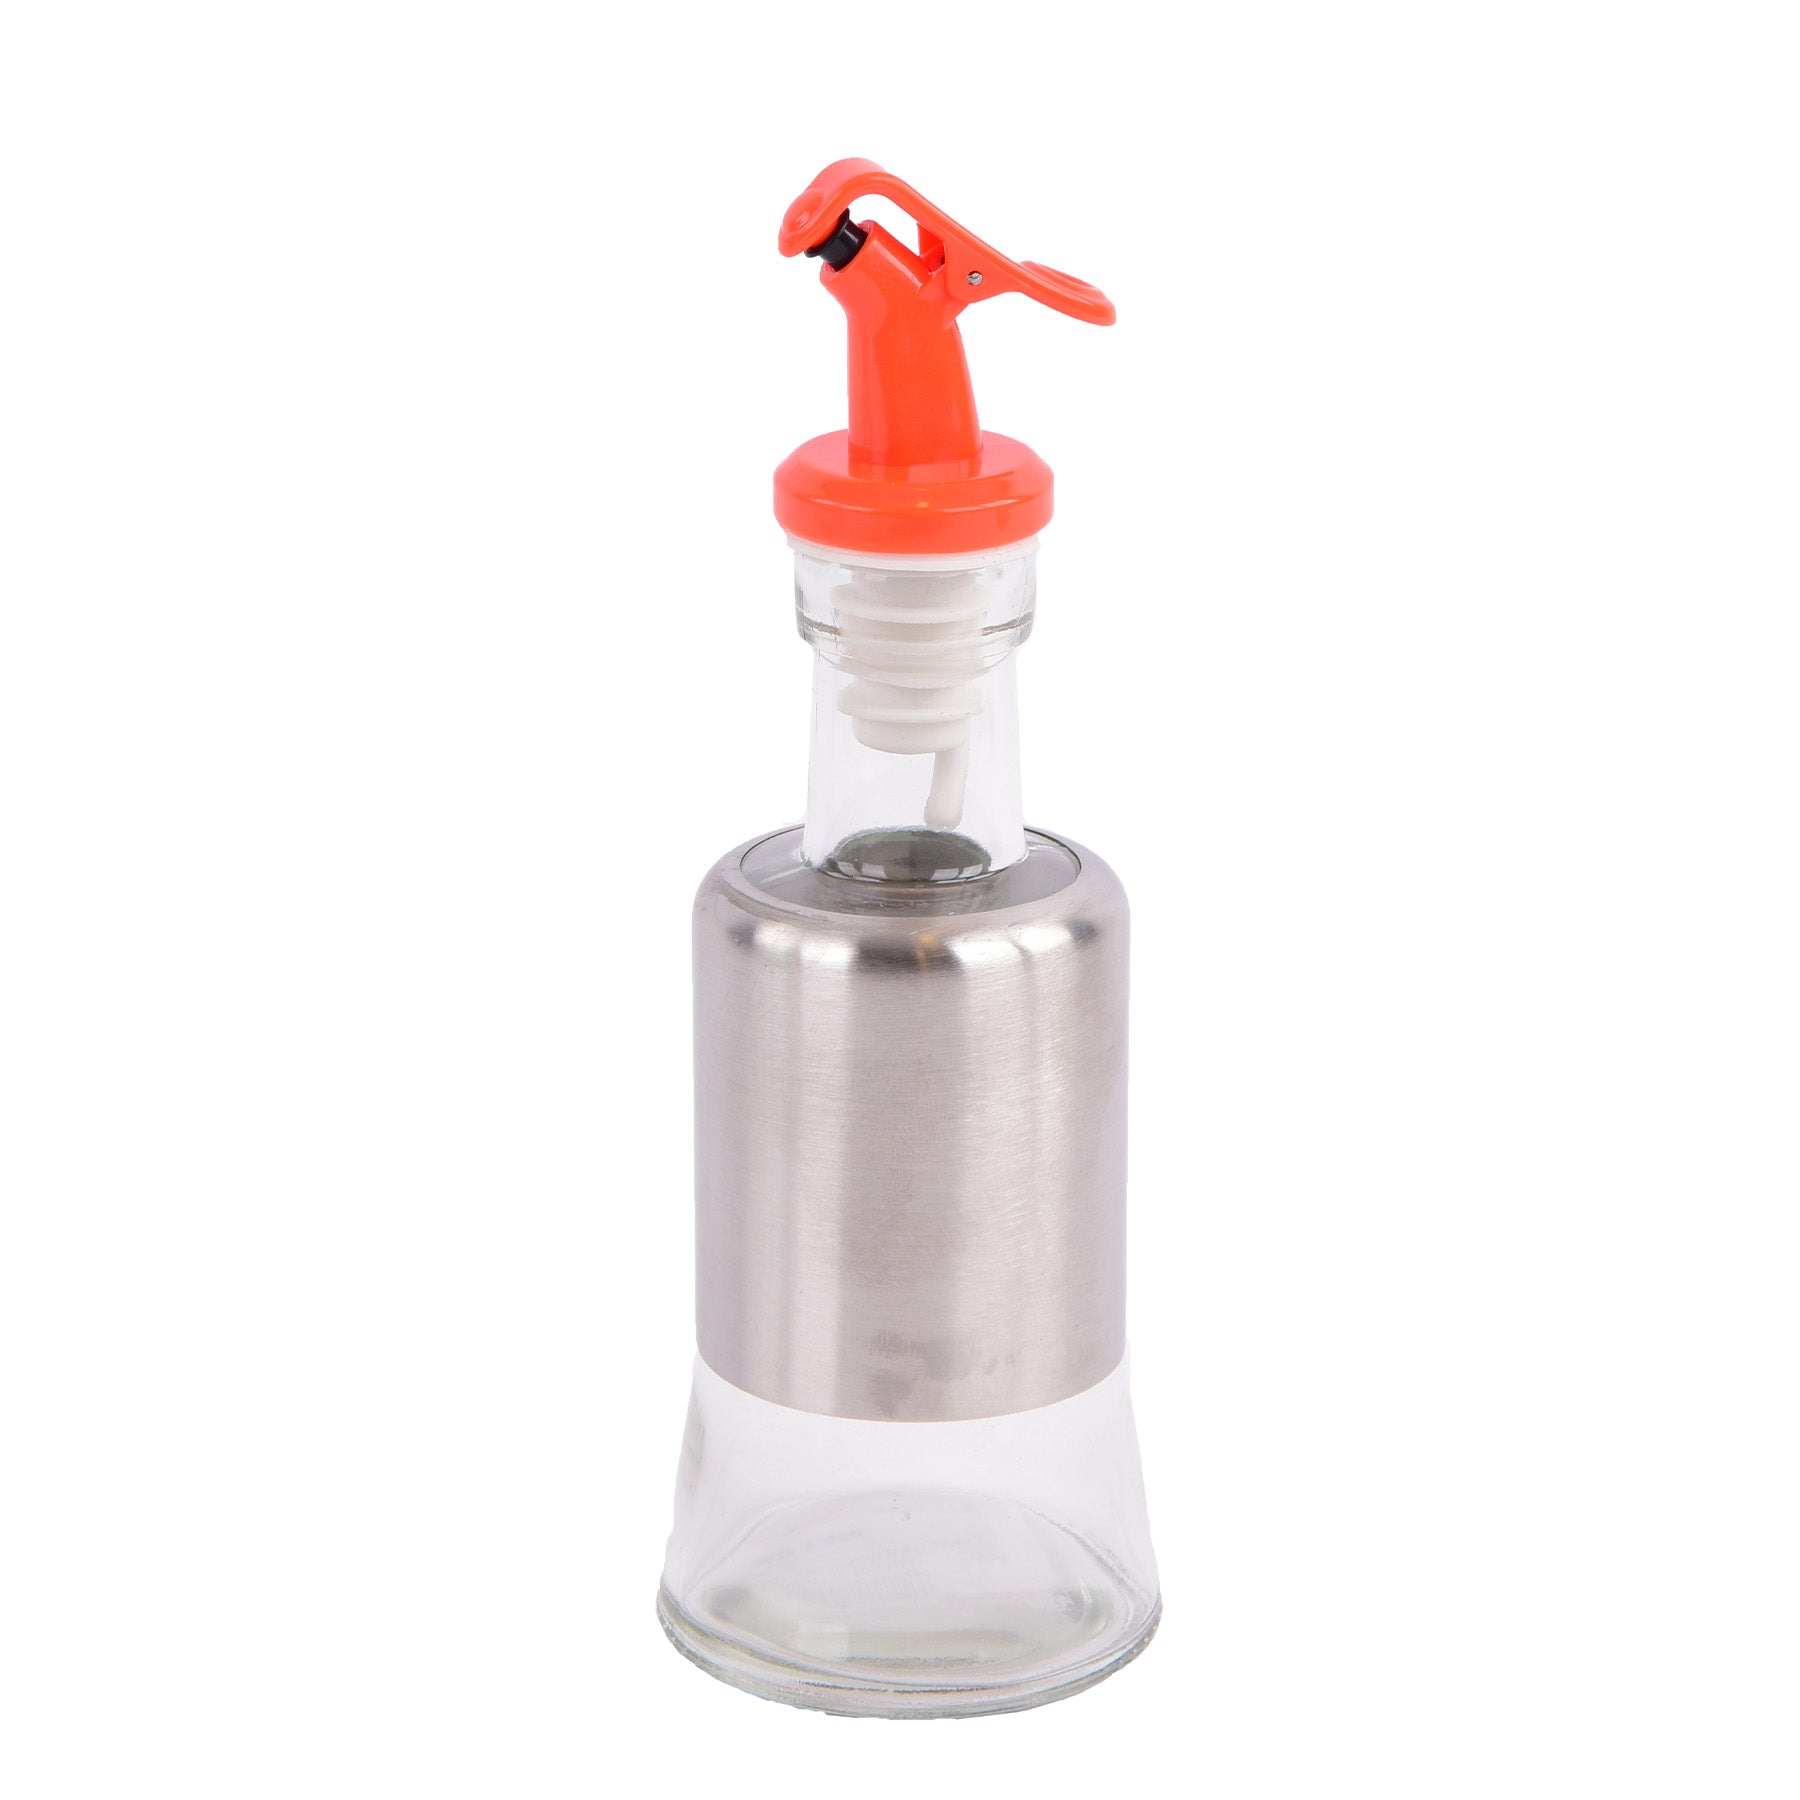 Oil and Vinegar Bottle with Orange Lid